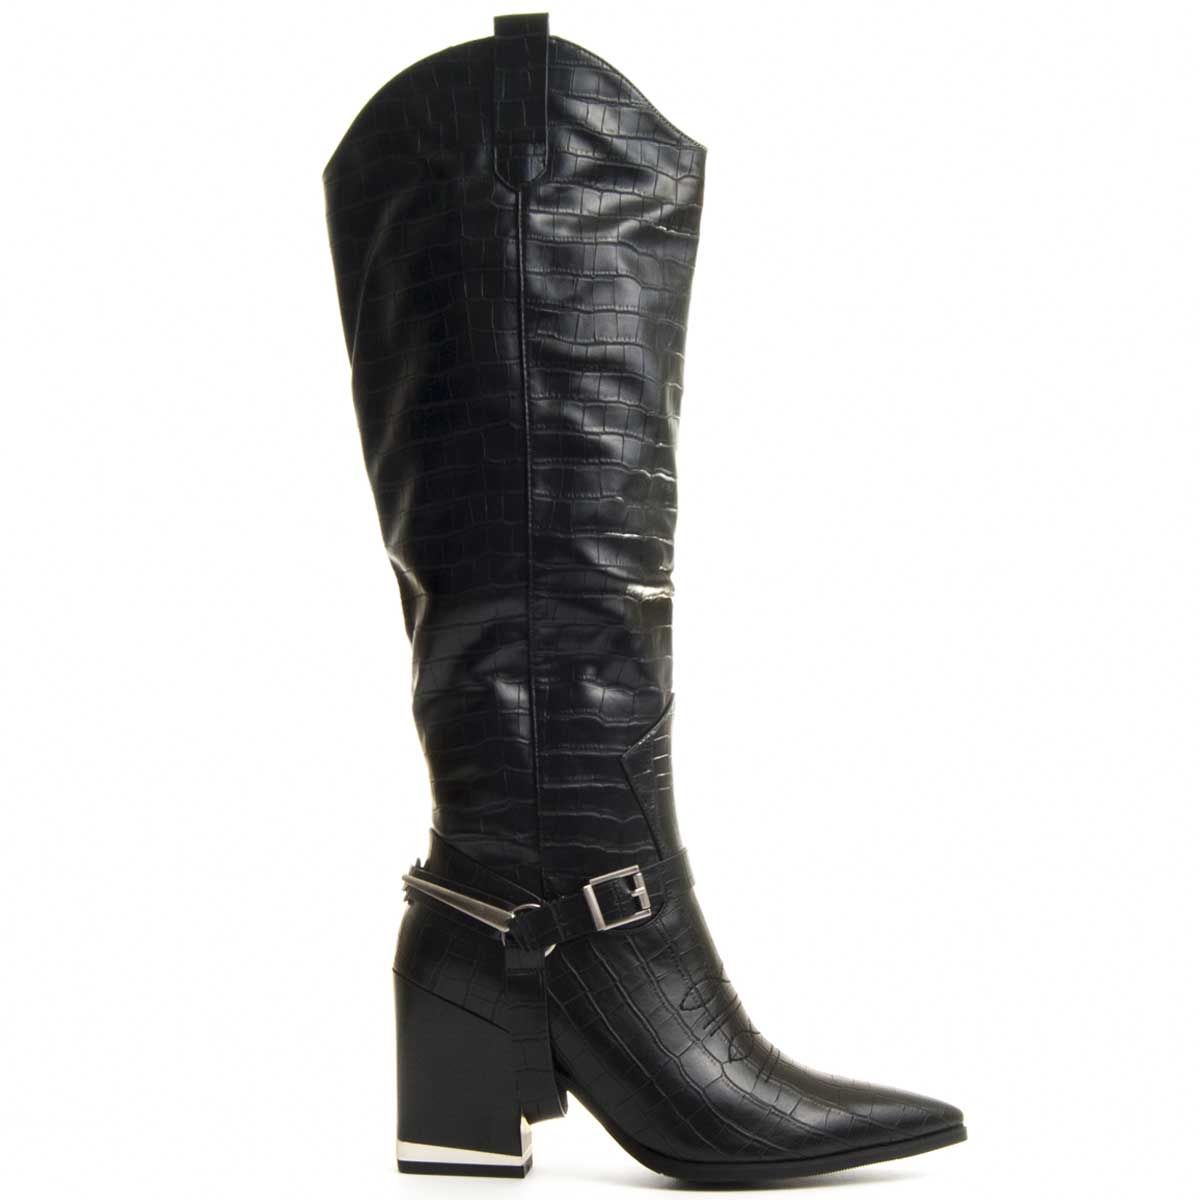 Montevita Laddy Knee High Boot in Black